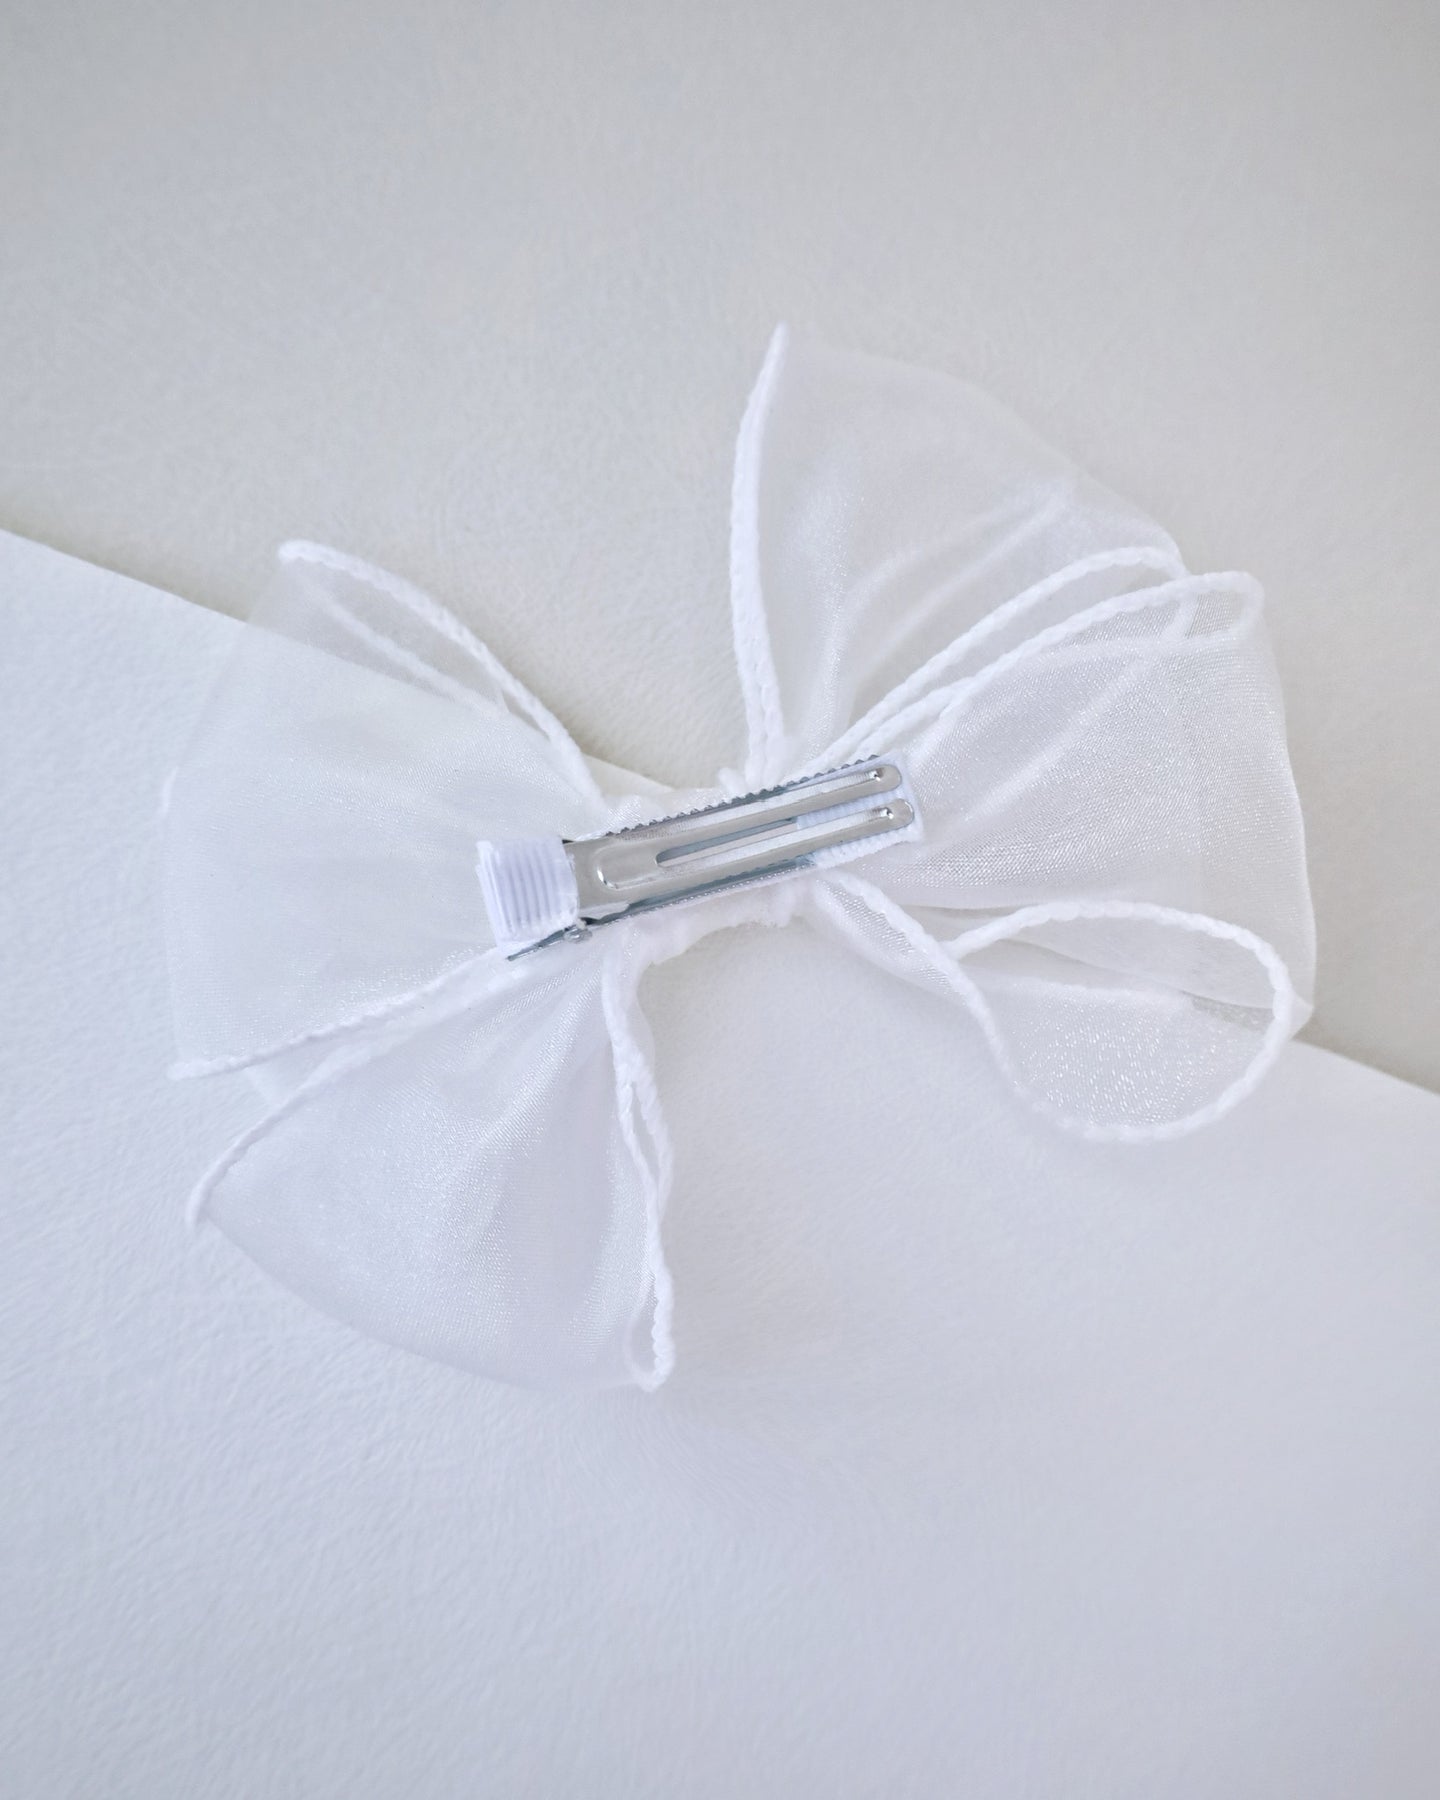 KP Accessories White Organza Layered Hair Bow, Wedding Accessories, Girls Hair Clips White / Shoe Clips (1 Pair)